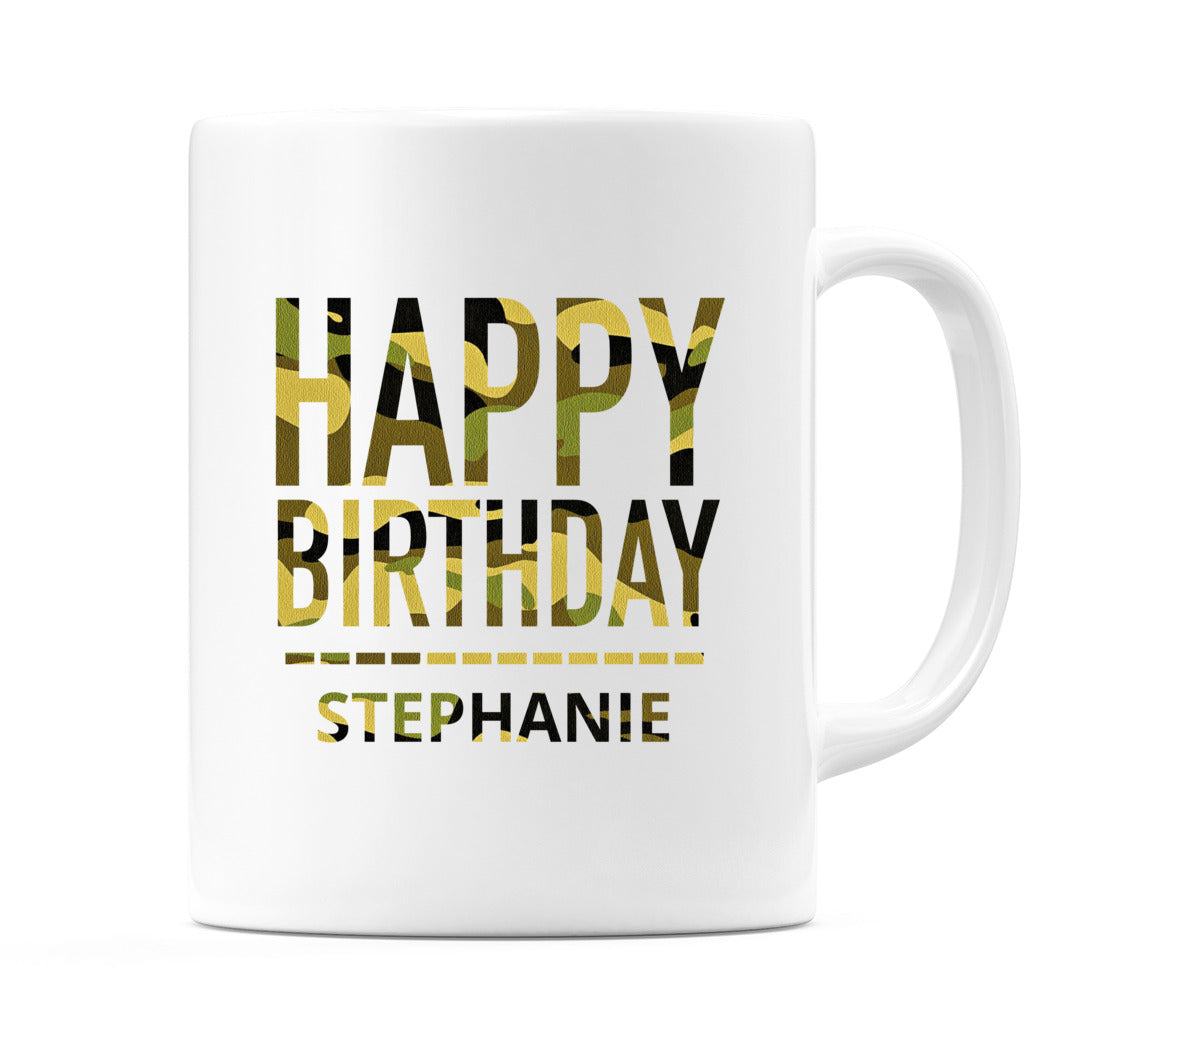 Happy Birthday Stephanie (Camo) Mug Cup by WeDoMugs